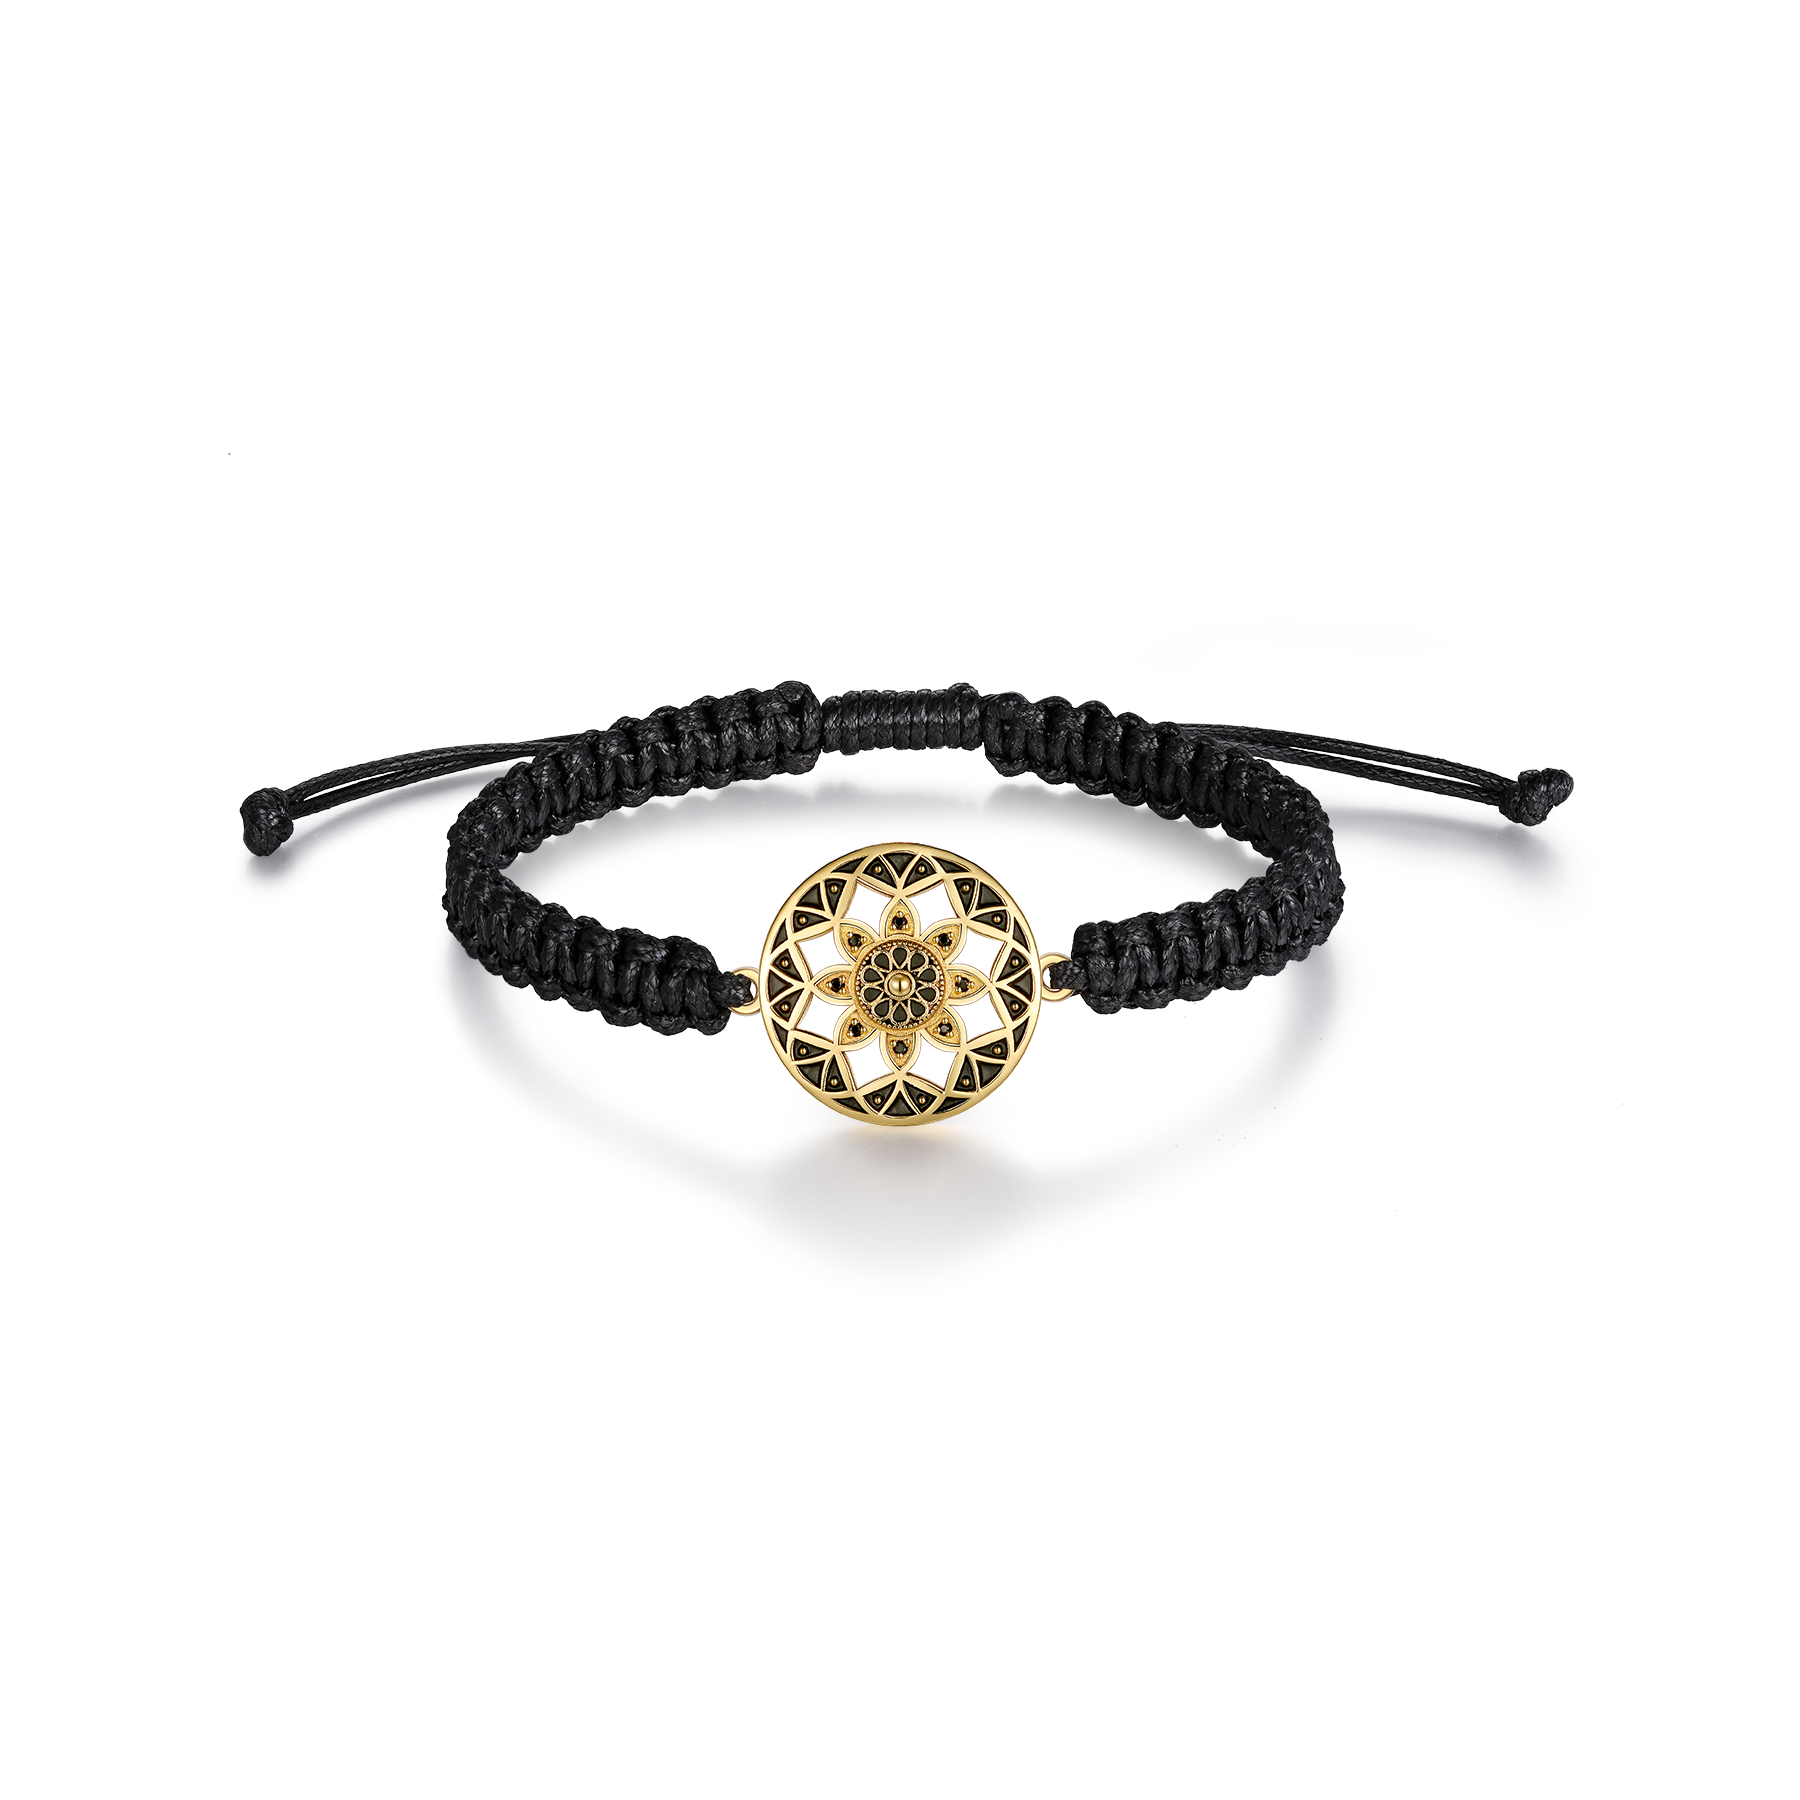 Mandala Design Black Rope Braid Bracelet